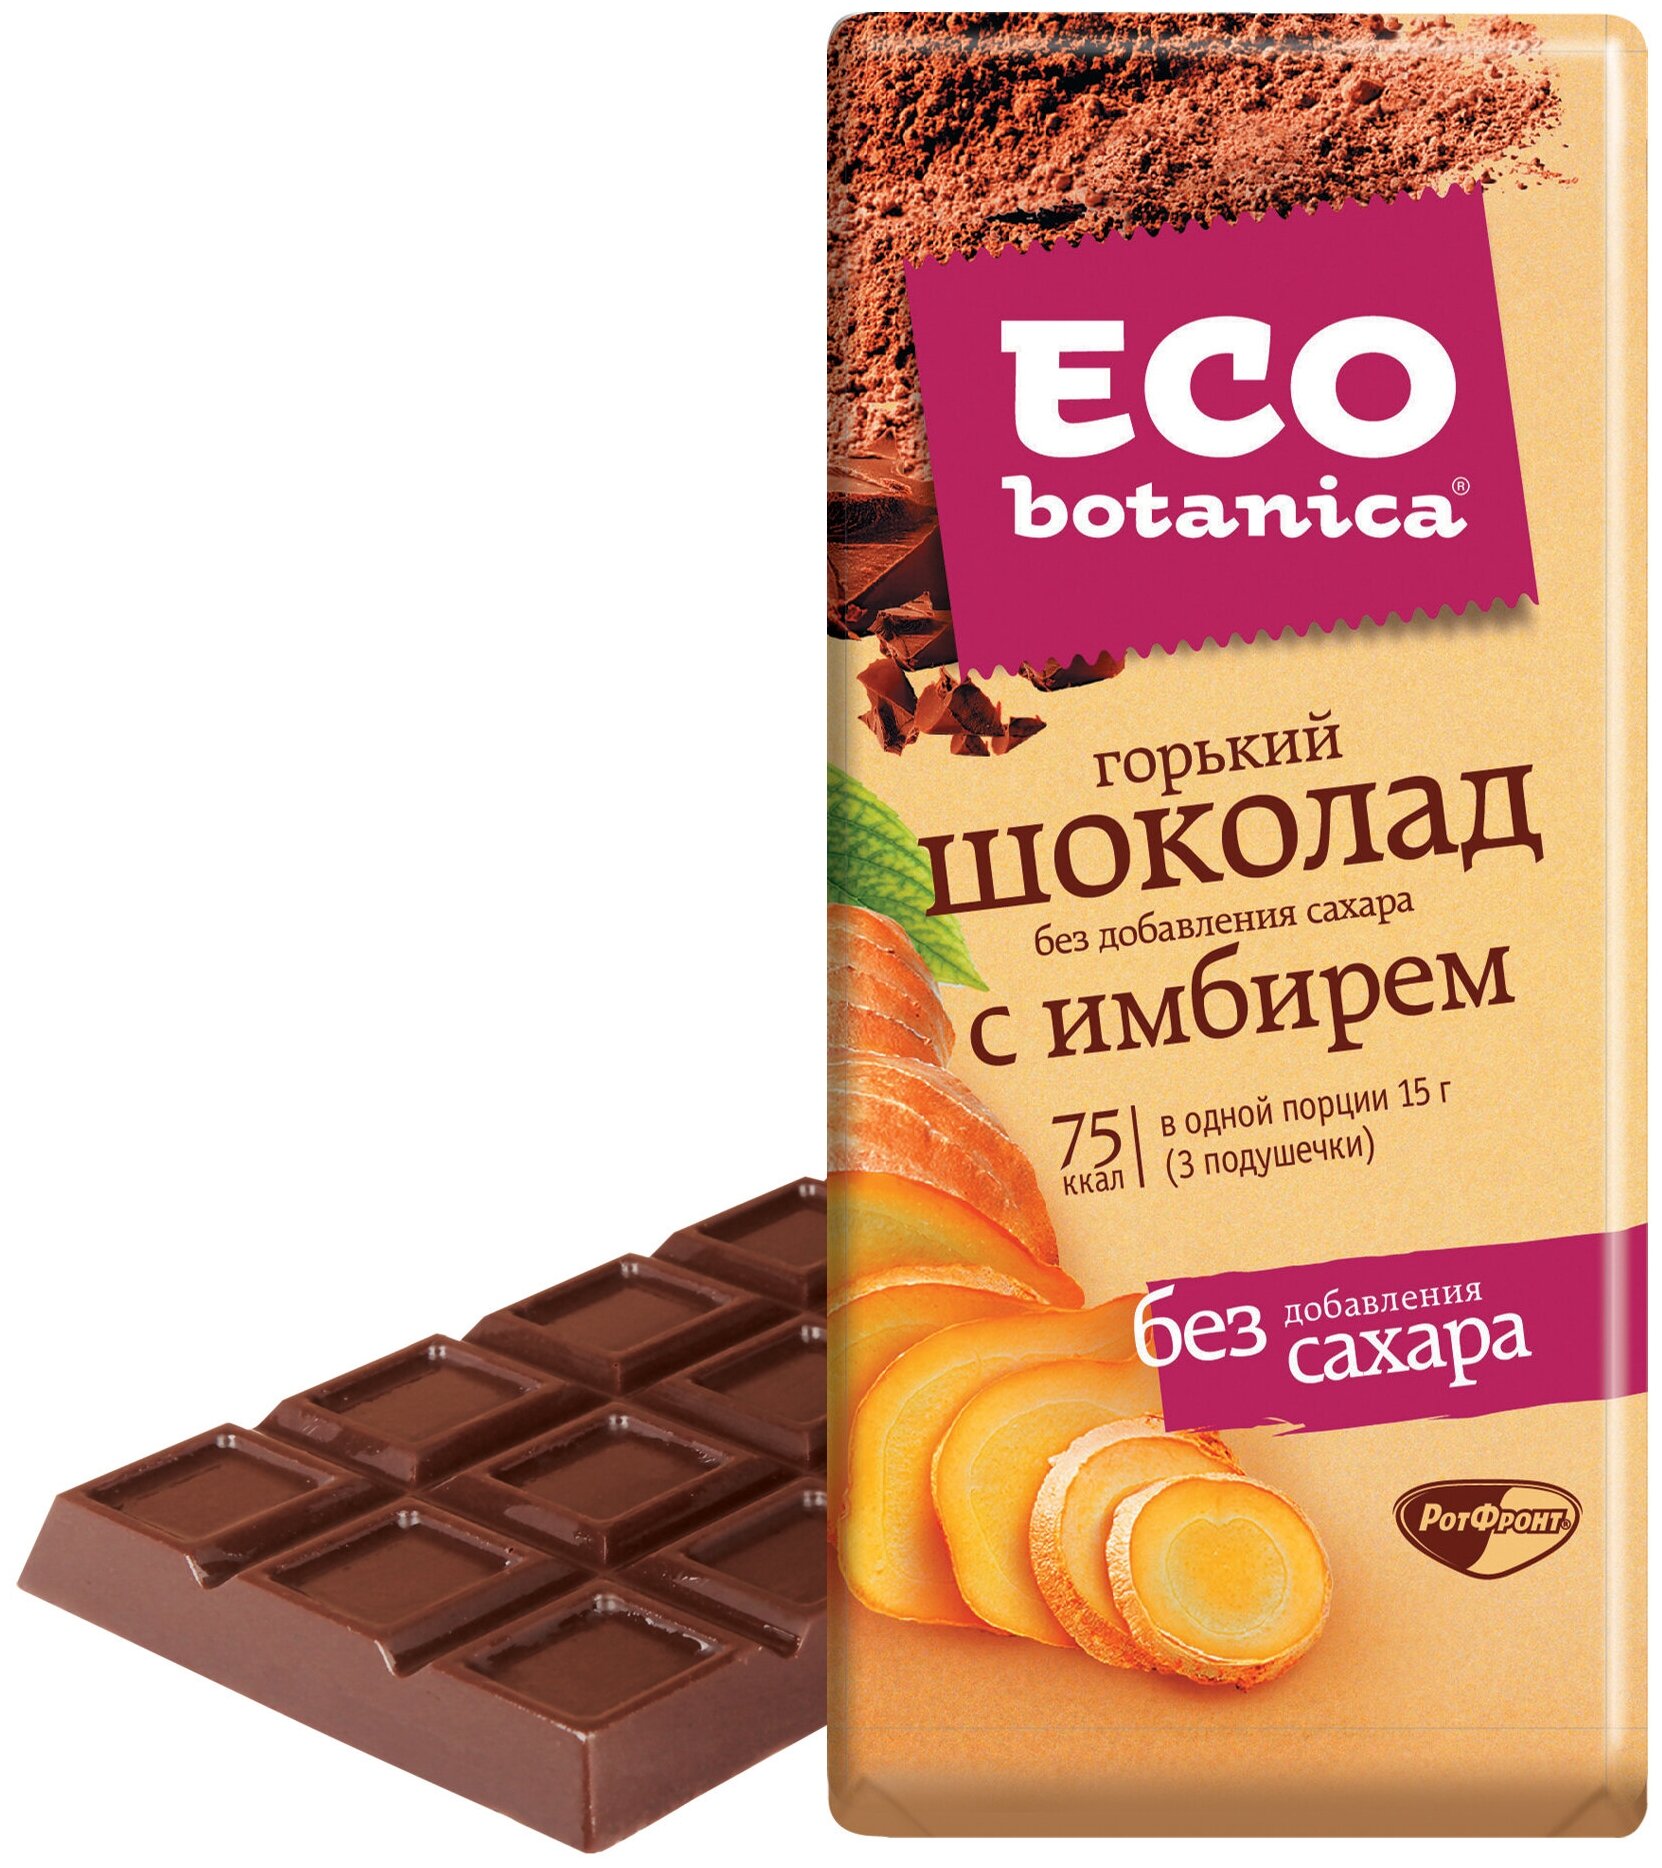 Eco botanica "С имбирем" - содержание какао: 58.6 %